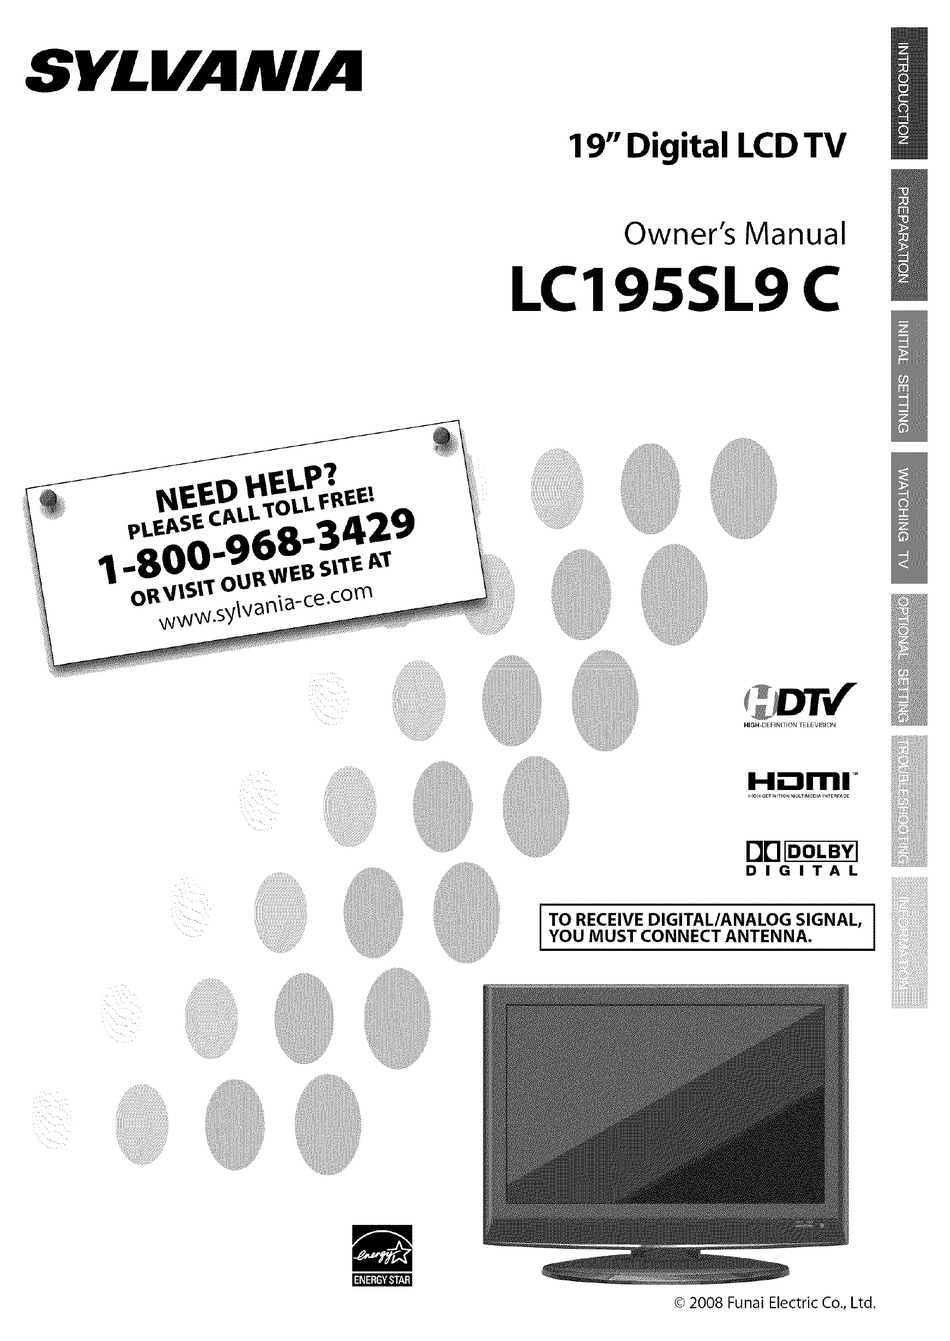 SYLVANIA LC195SL9C OWNER'S MANUAL Pdf Download | ManualsLib